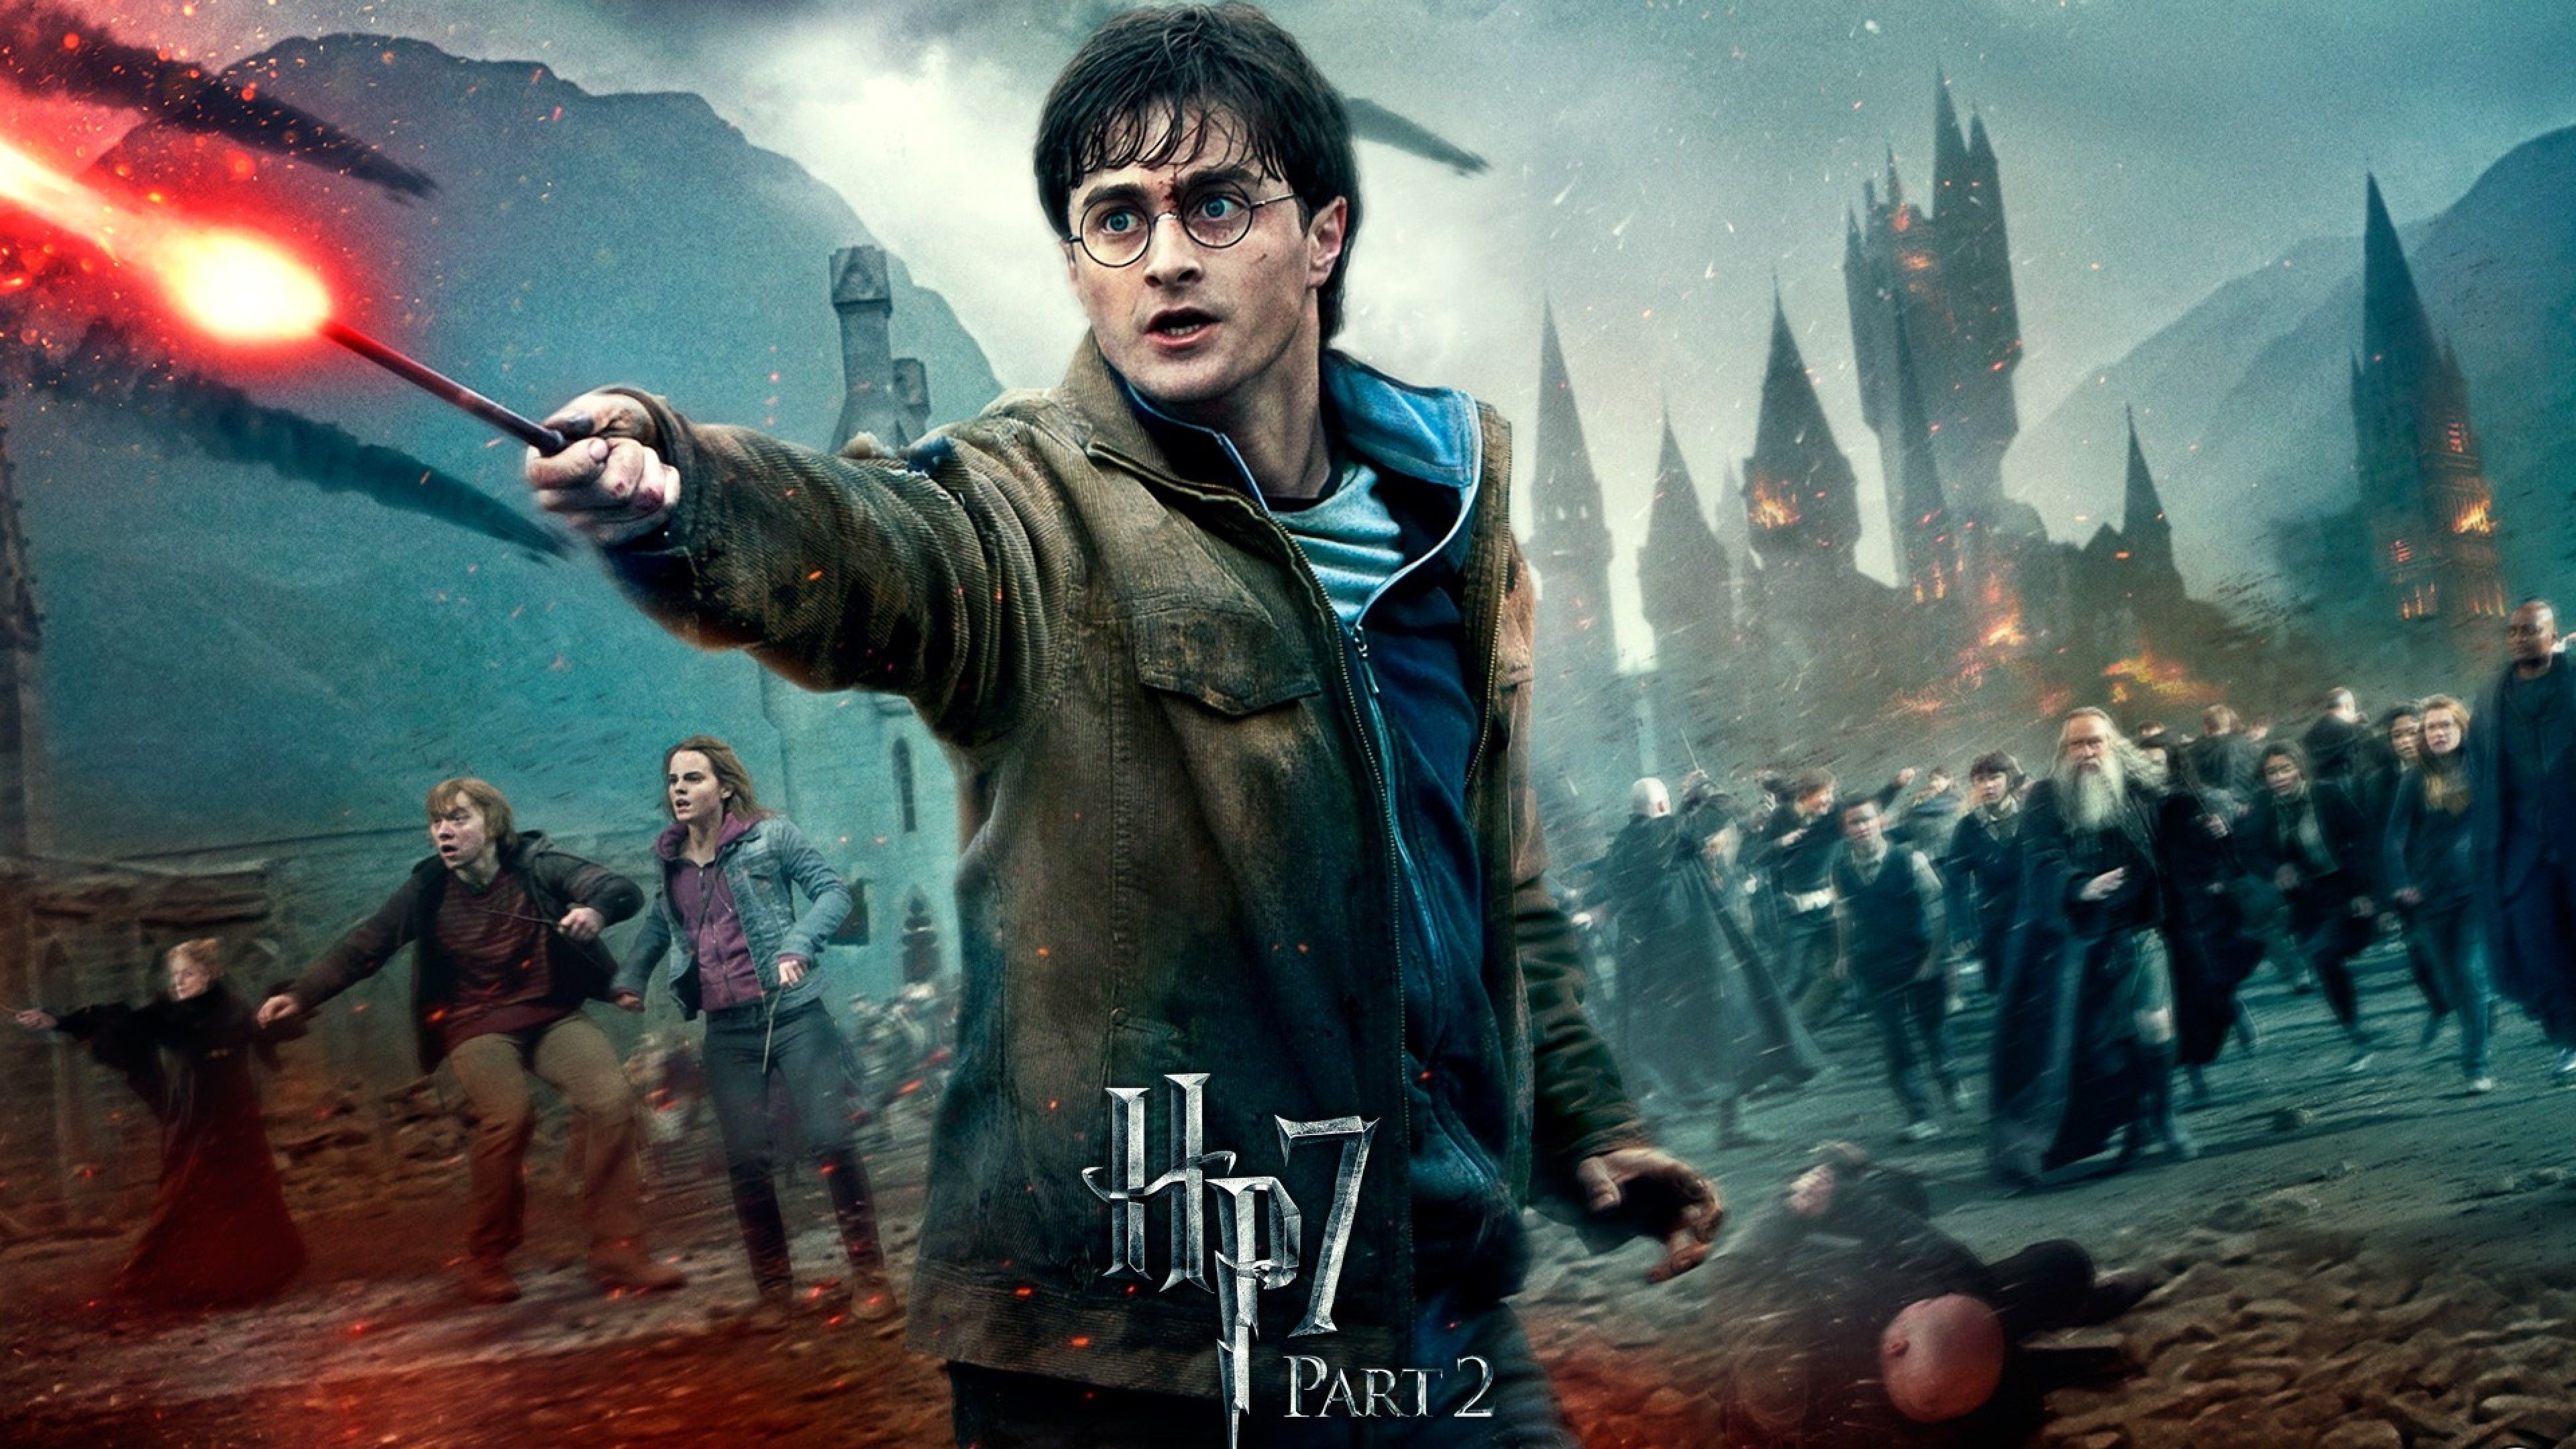 Harry Potter 4K Ultra HD wallpapers, Wizarding world, Movie series, High resolution, 3840x2160 4K Desktop